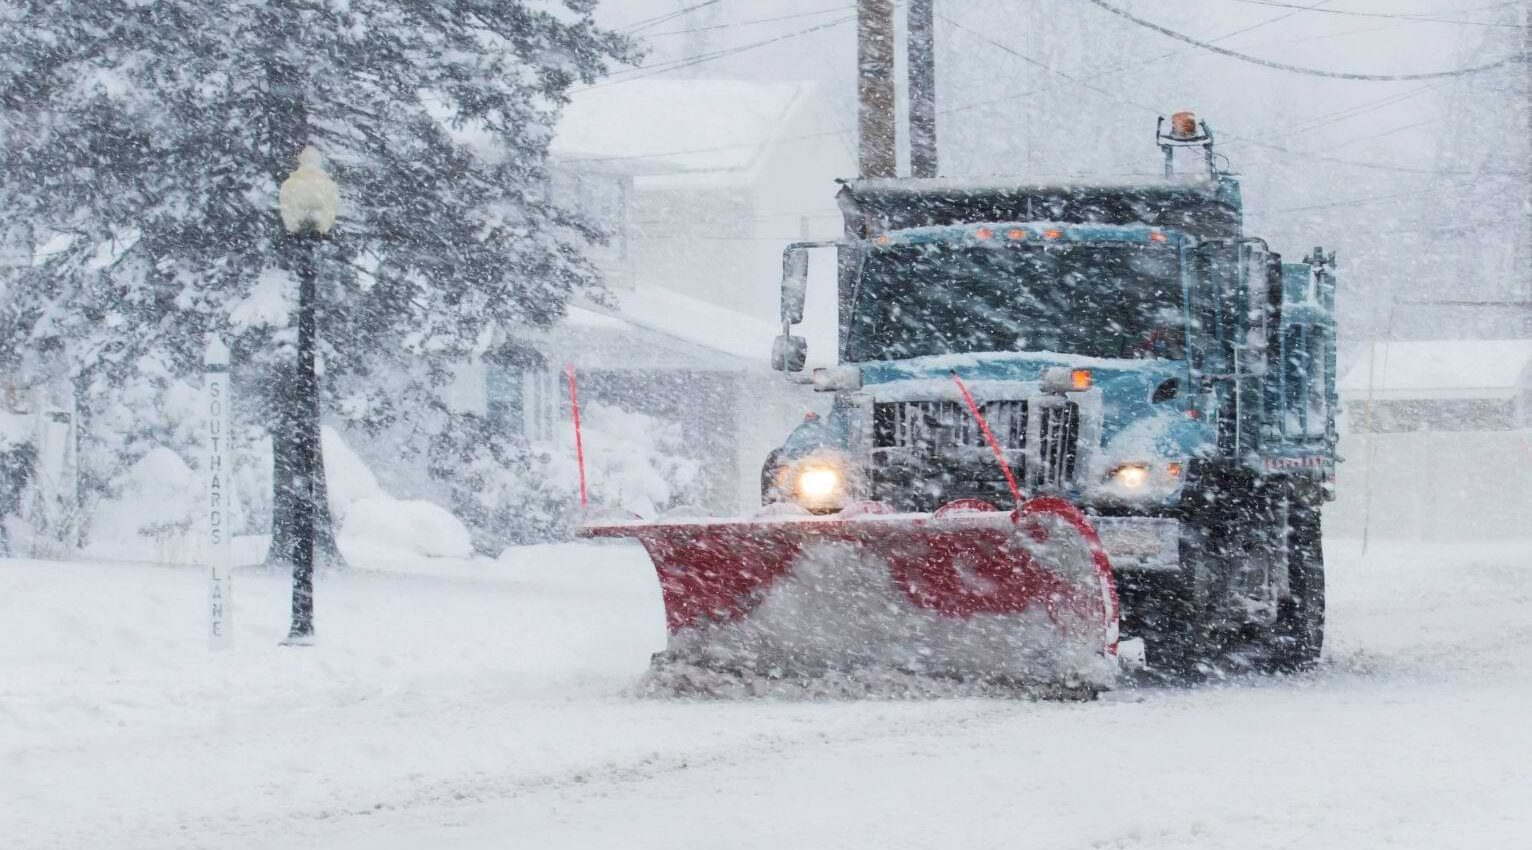 Snow Removing Truck 1 Aspect Ratio 1472 816